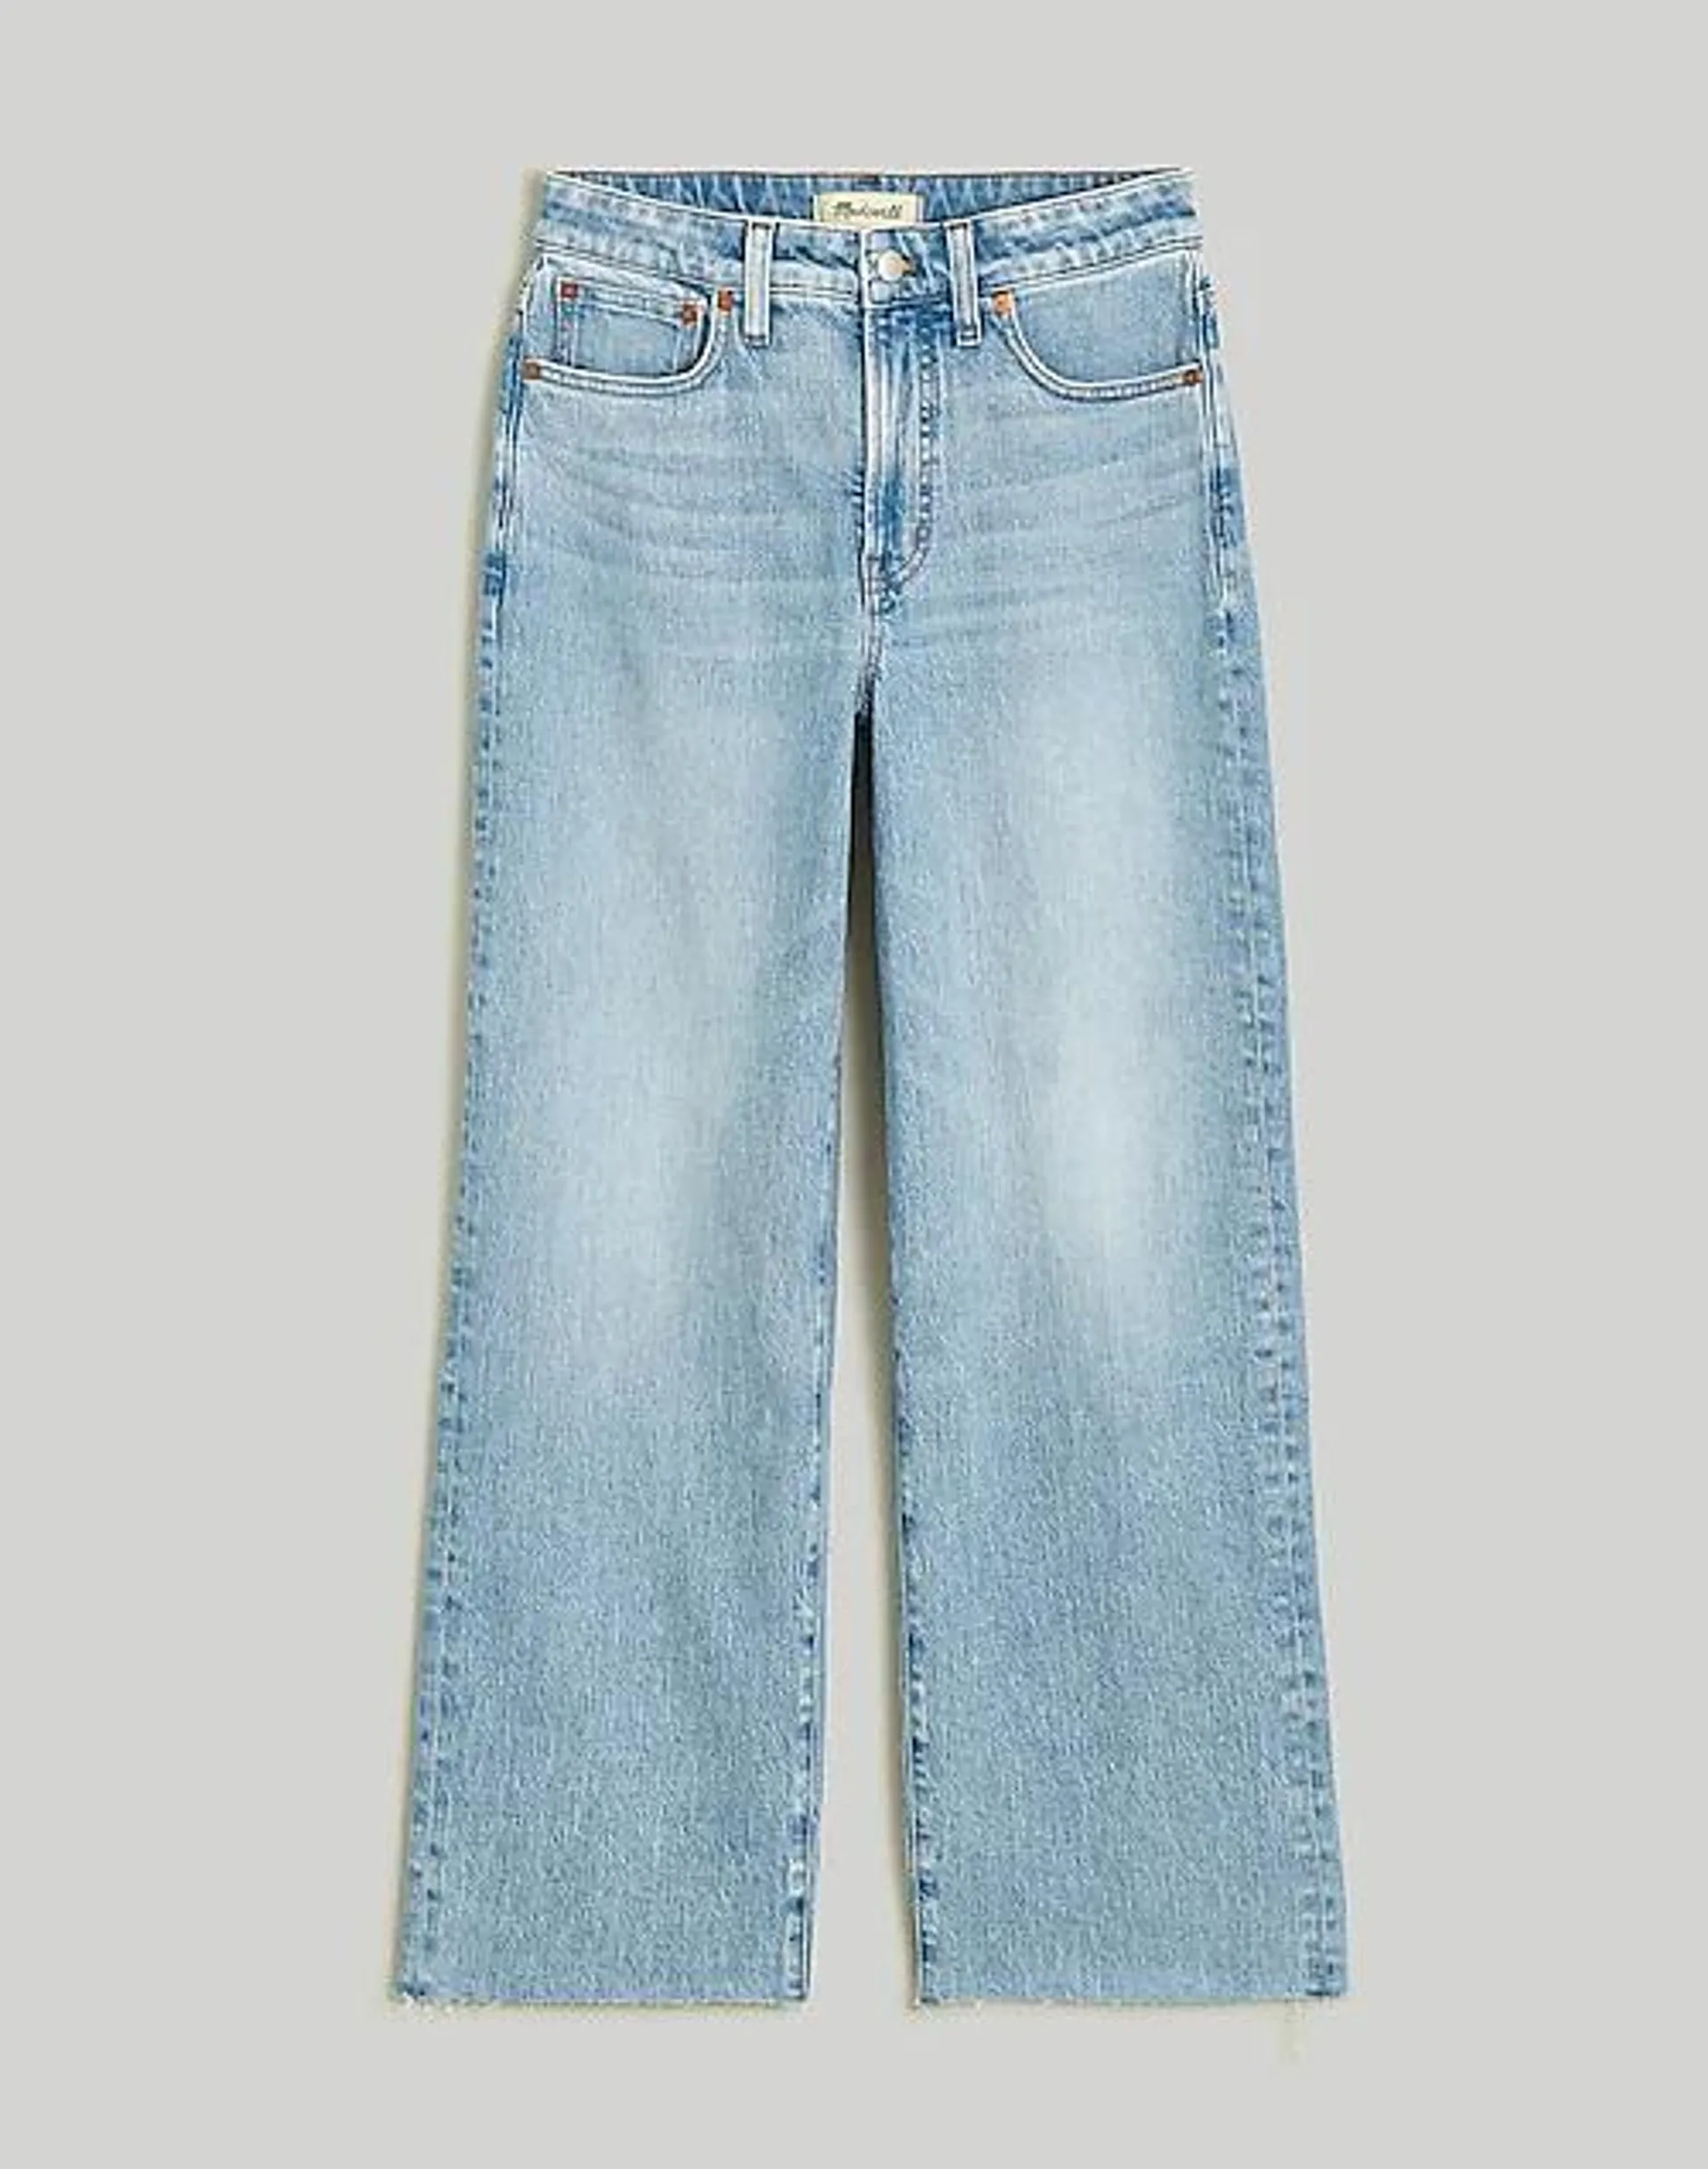 The Curvy Perfect Vintage Wide-Leg Crop Jean in Altoona Wash: Raw-Hem Edition